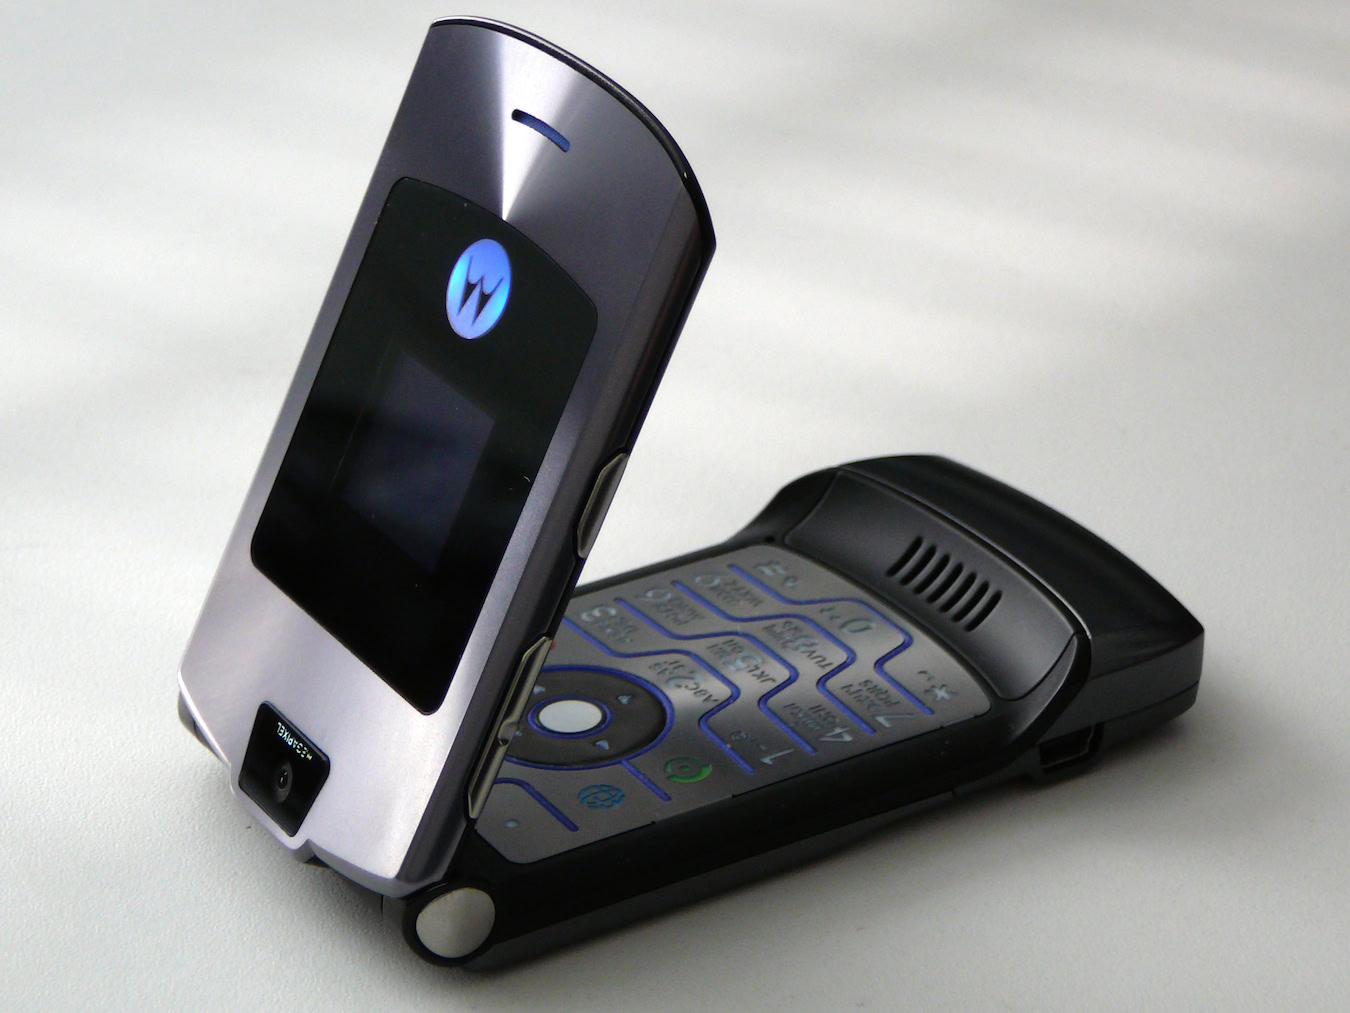 Motorola just revived its legendary Razr phone